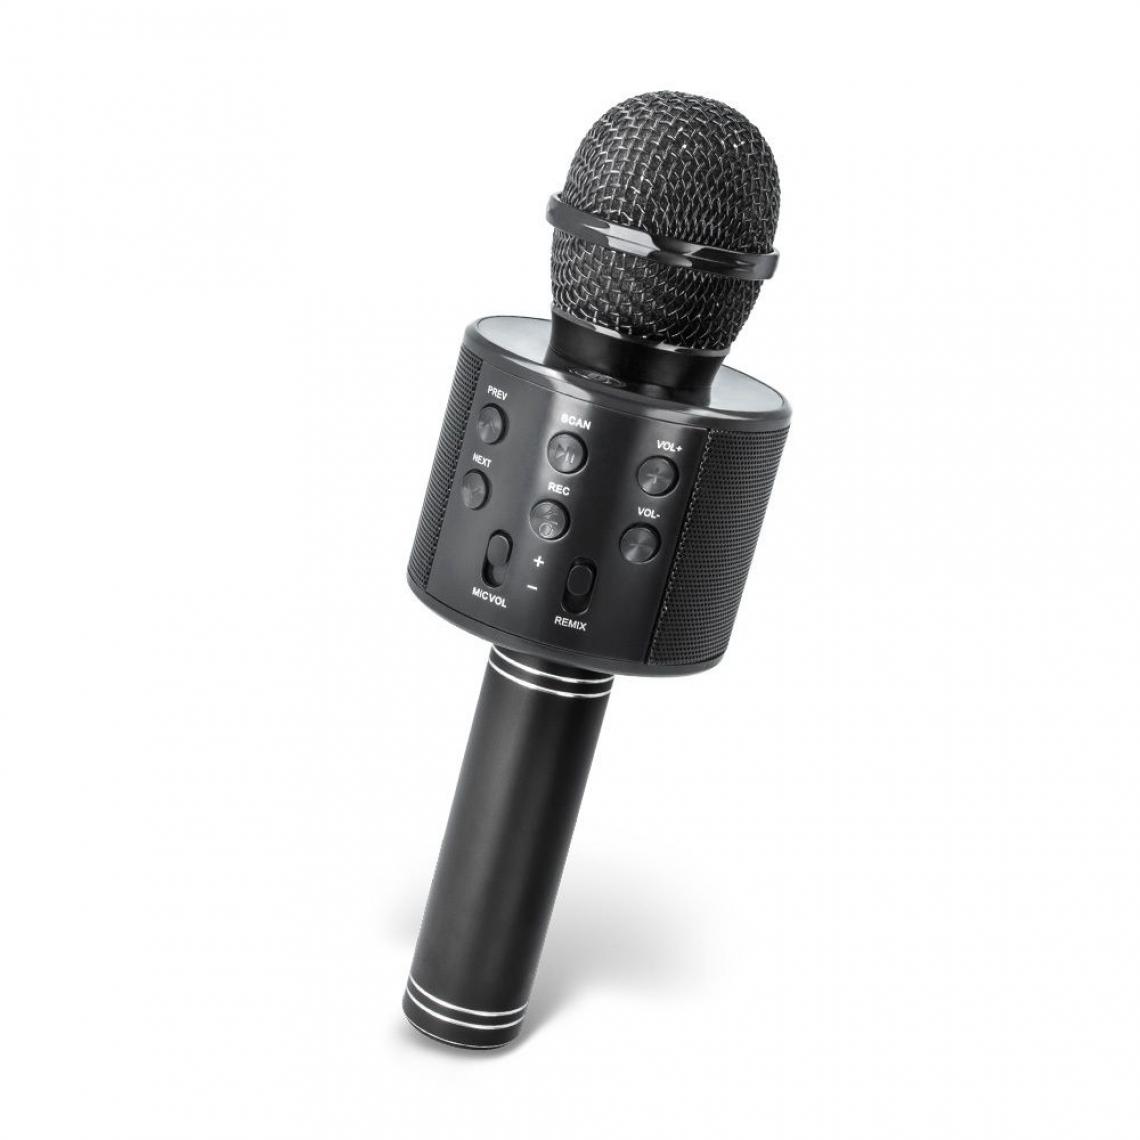 Ozzzo - Microphone Karaoke bluetooth haut parleur ozzzo noir pour Amigoo X18 - Autres accessoires smartphone